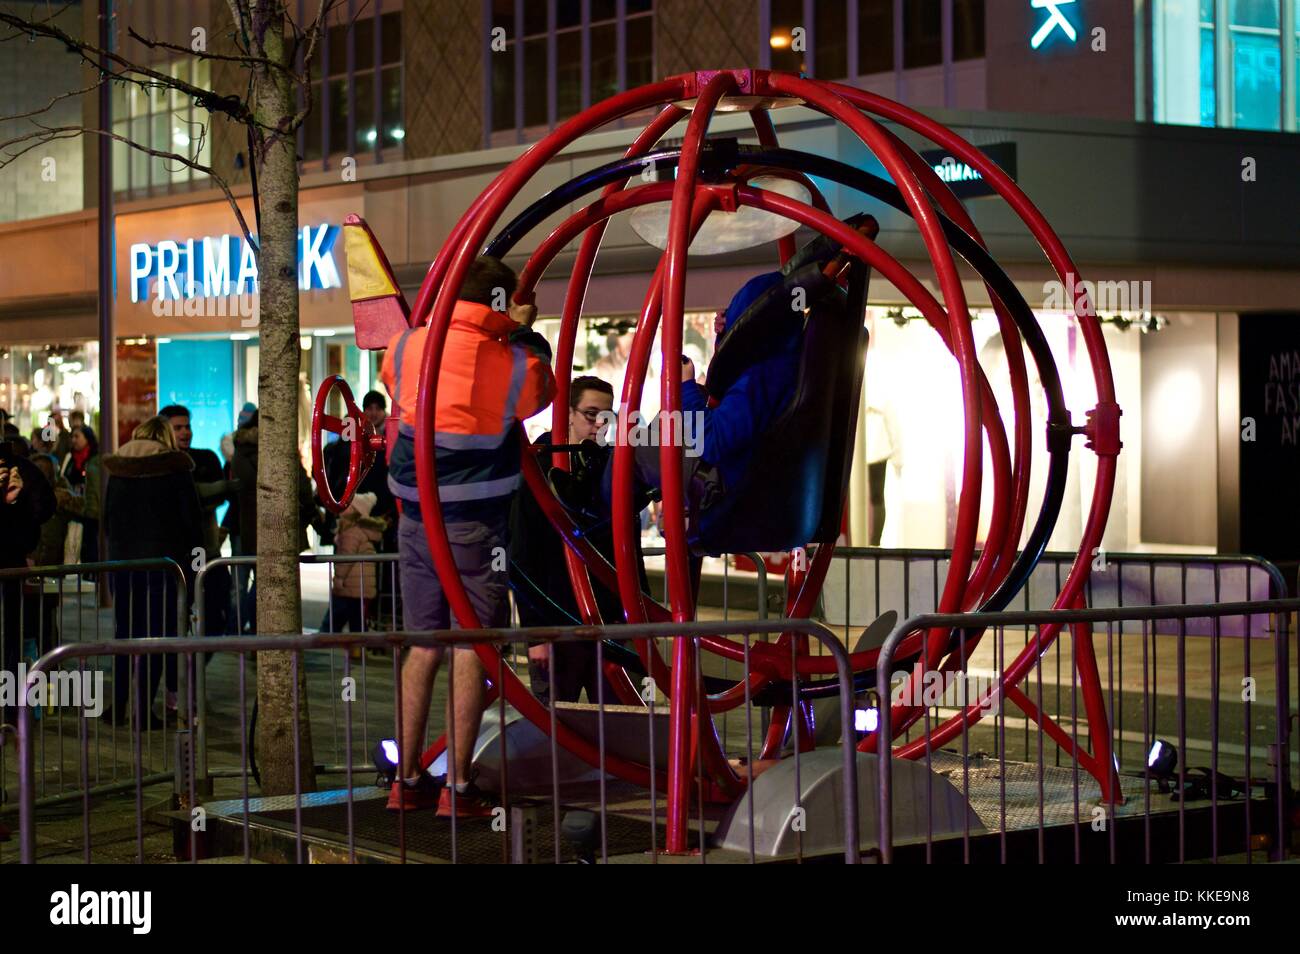 Garçon sur gyroscope spinning ball ride à Hemel Hempstead lumières de Noël sur l'interrupteur extérieur de primark, 2017, Hertfordshire uk Banque D'Images